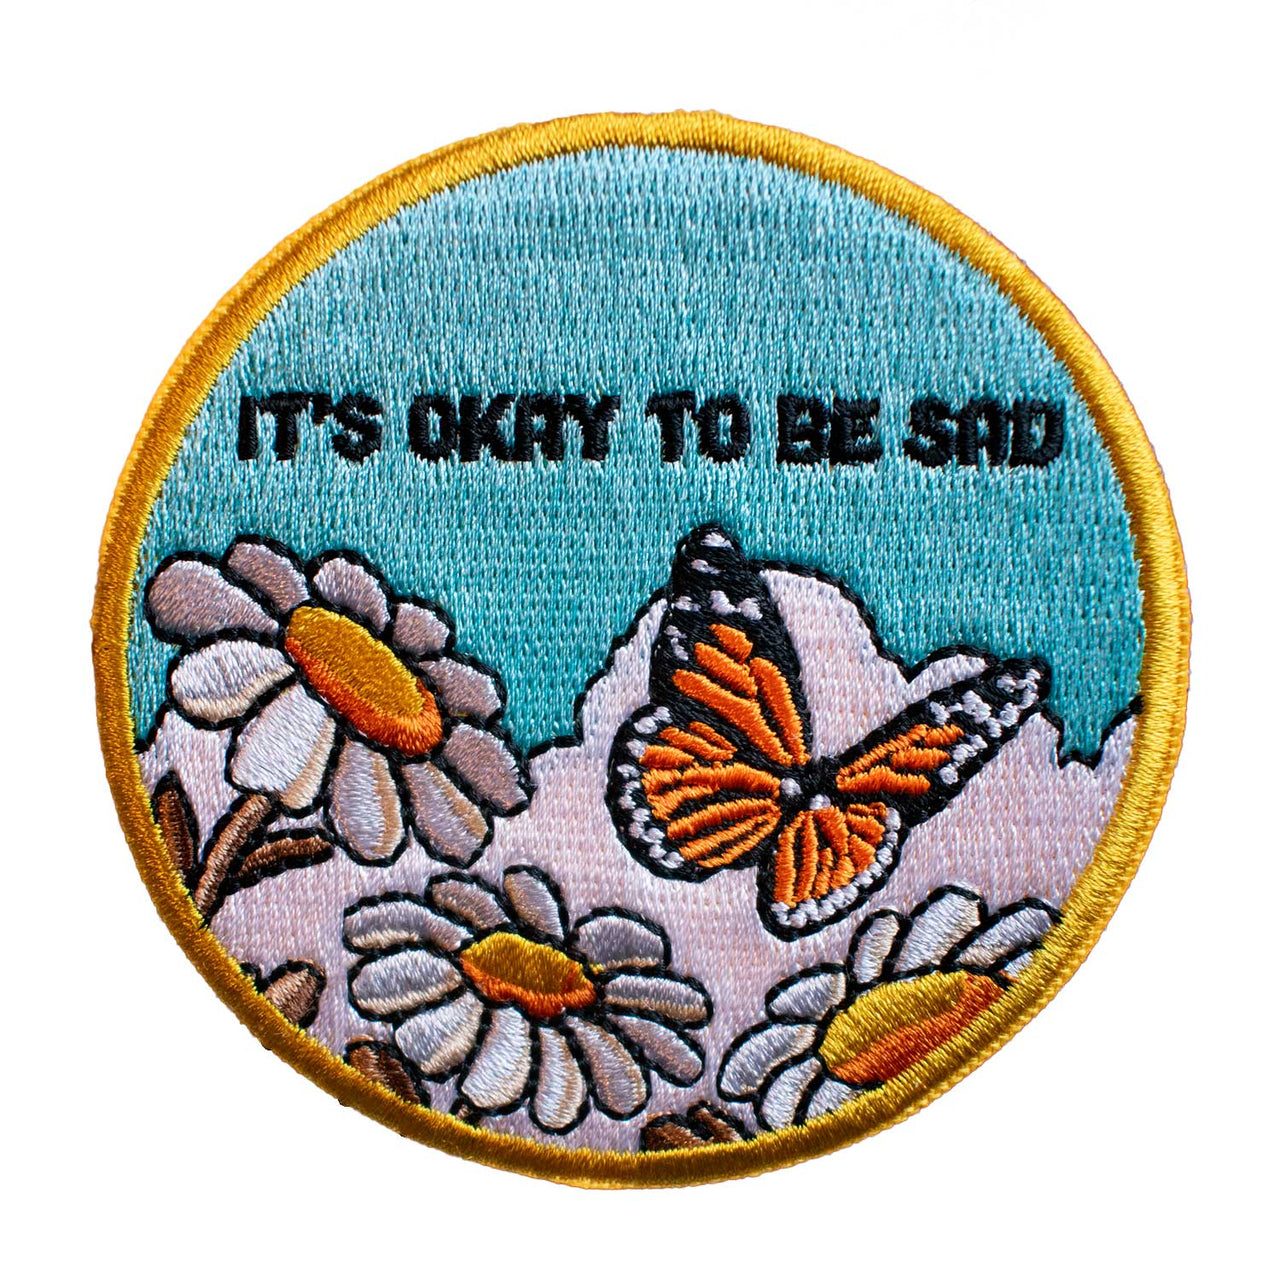 It's Okay To Be Sad (Iron-On Patch)